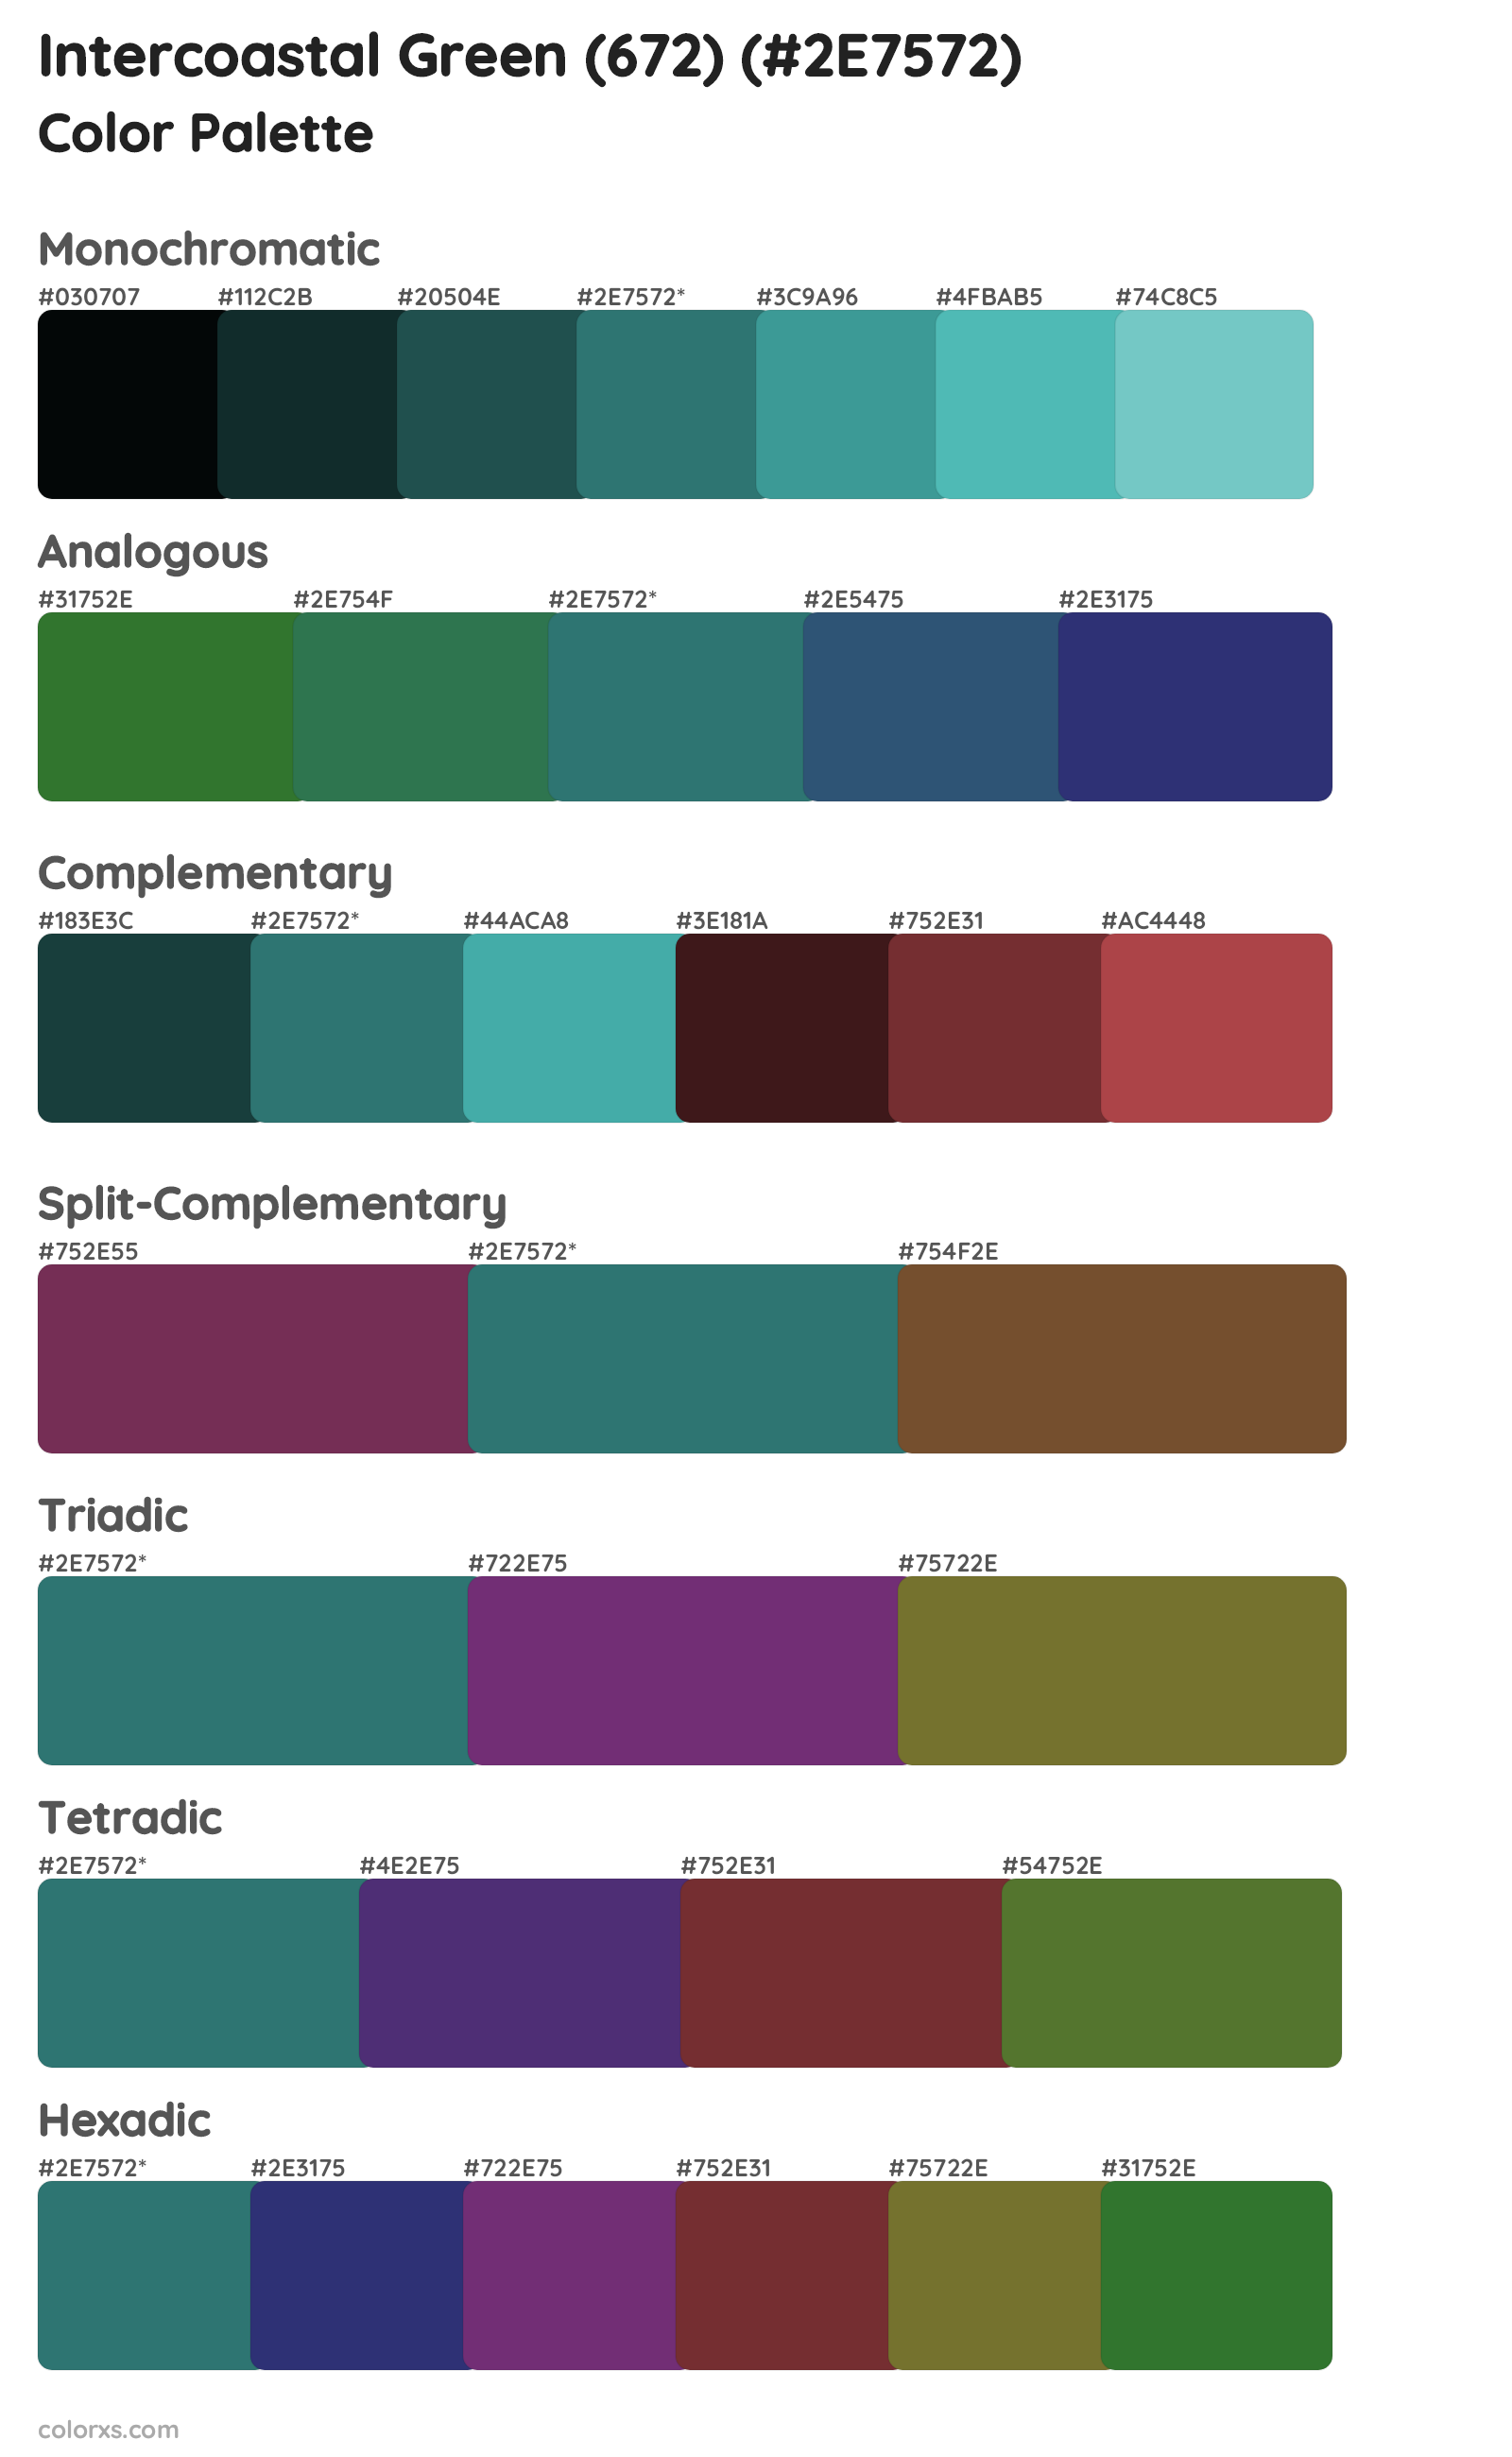 Intercoastal Green (672) Color Scheme Palettes